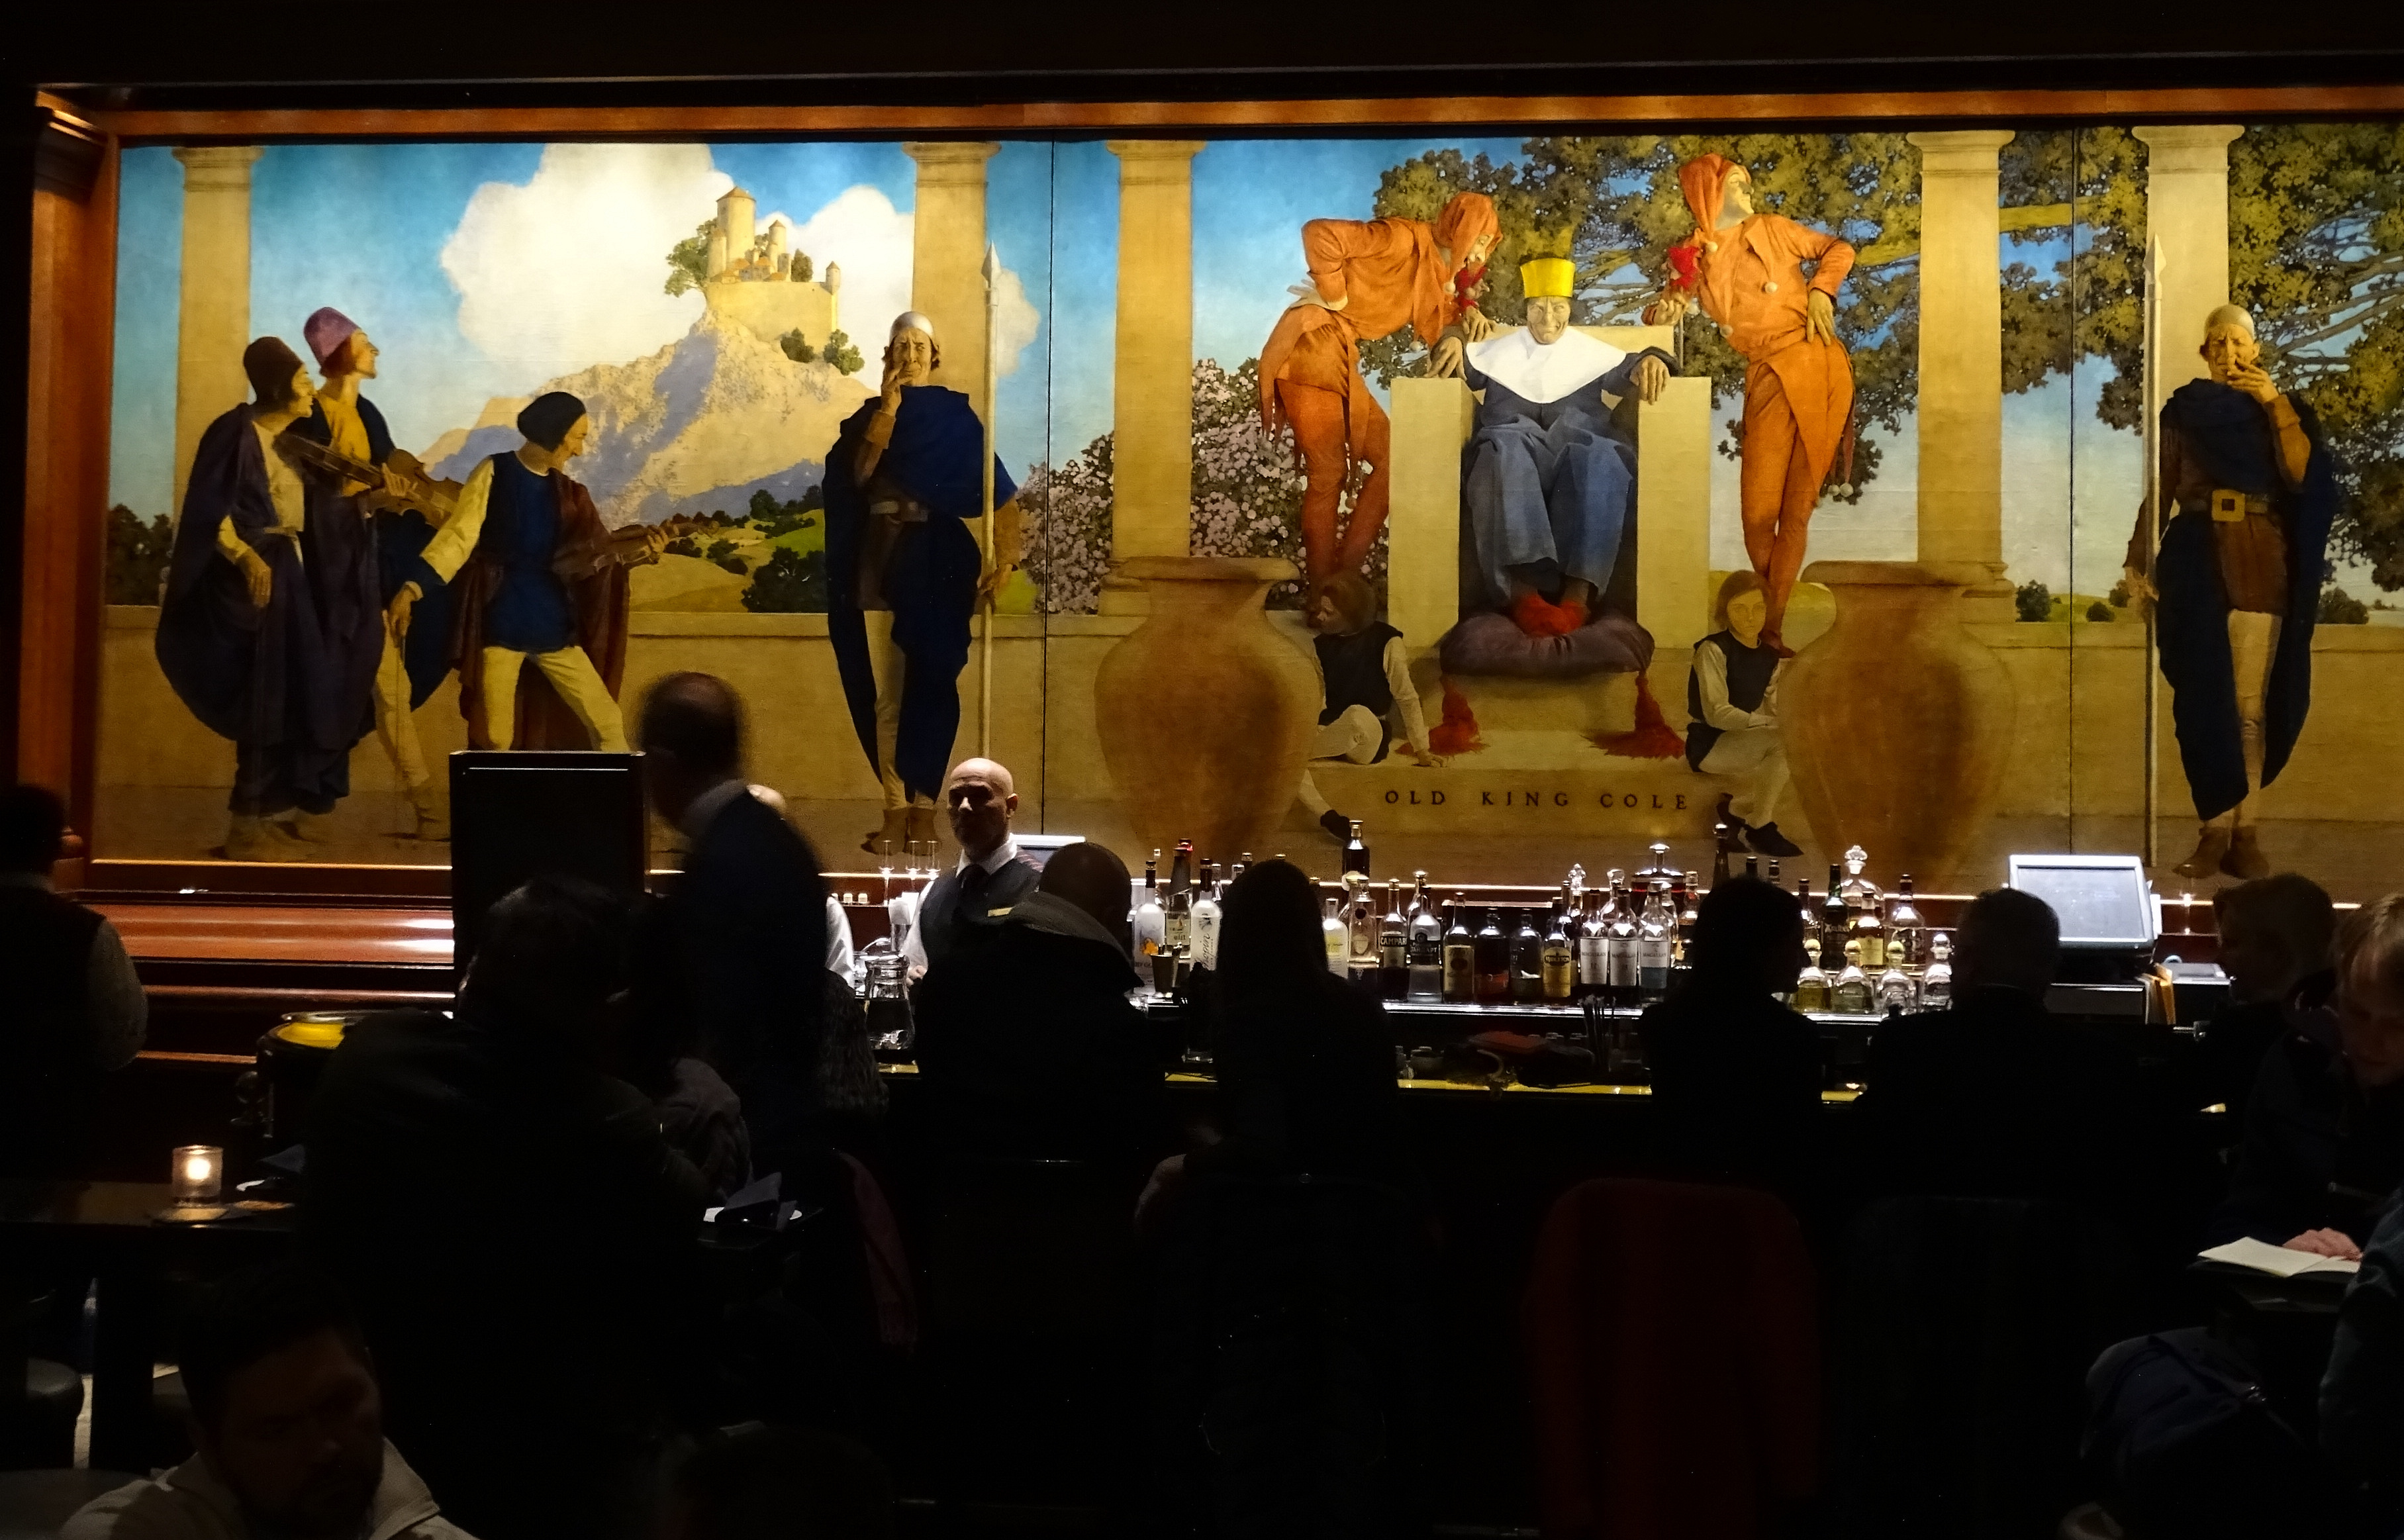 The St. Regis New York King Cole Bar